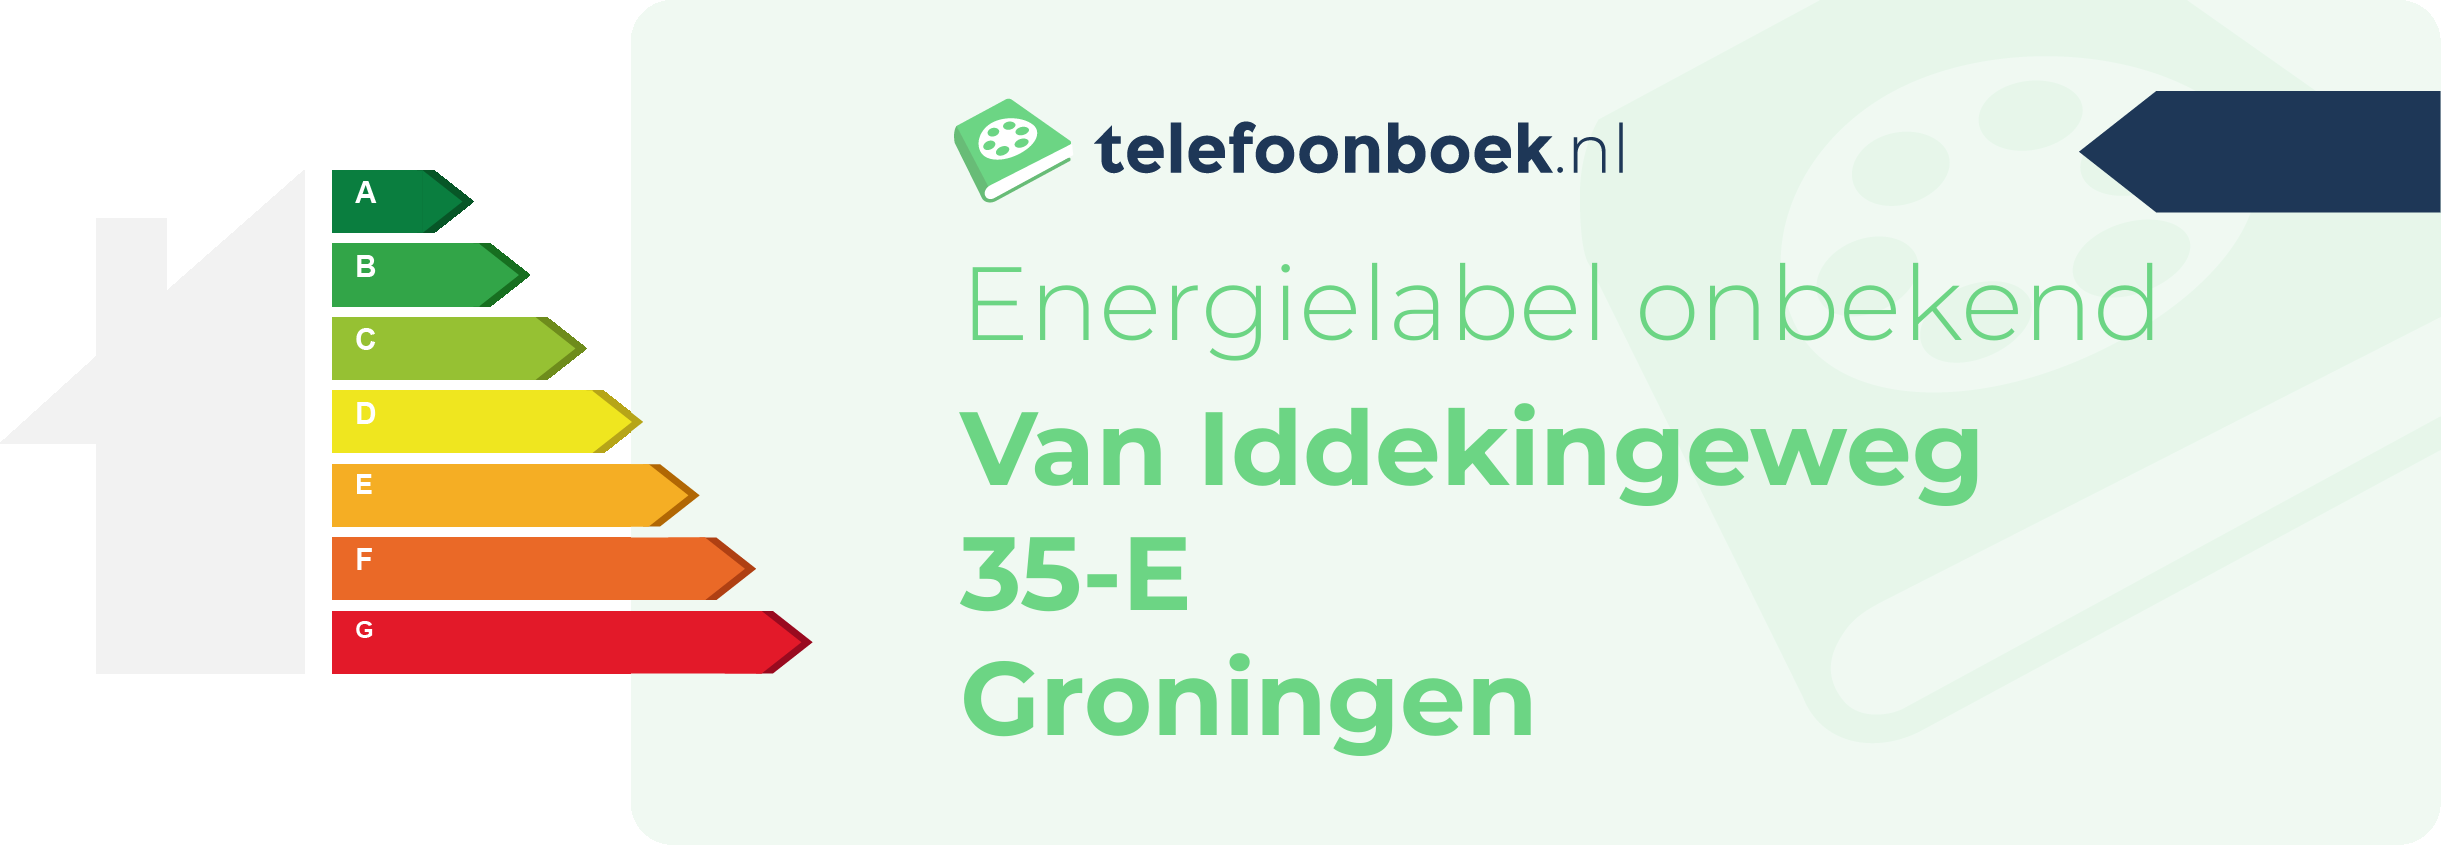 Energielabel Van Iddekingeweg 35-E Groningen